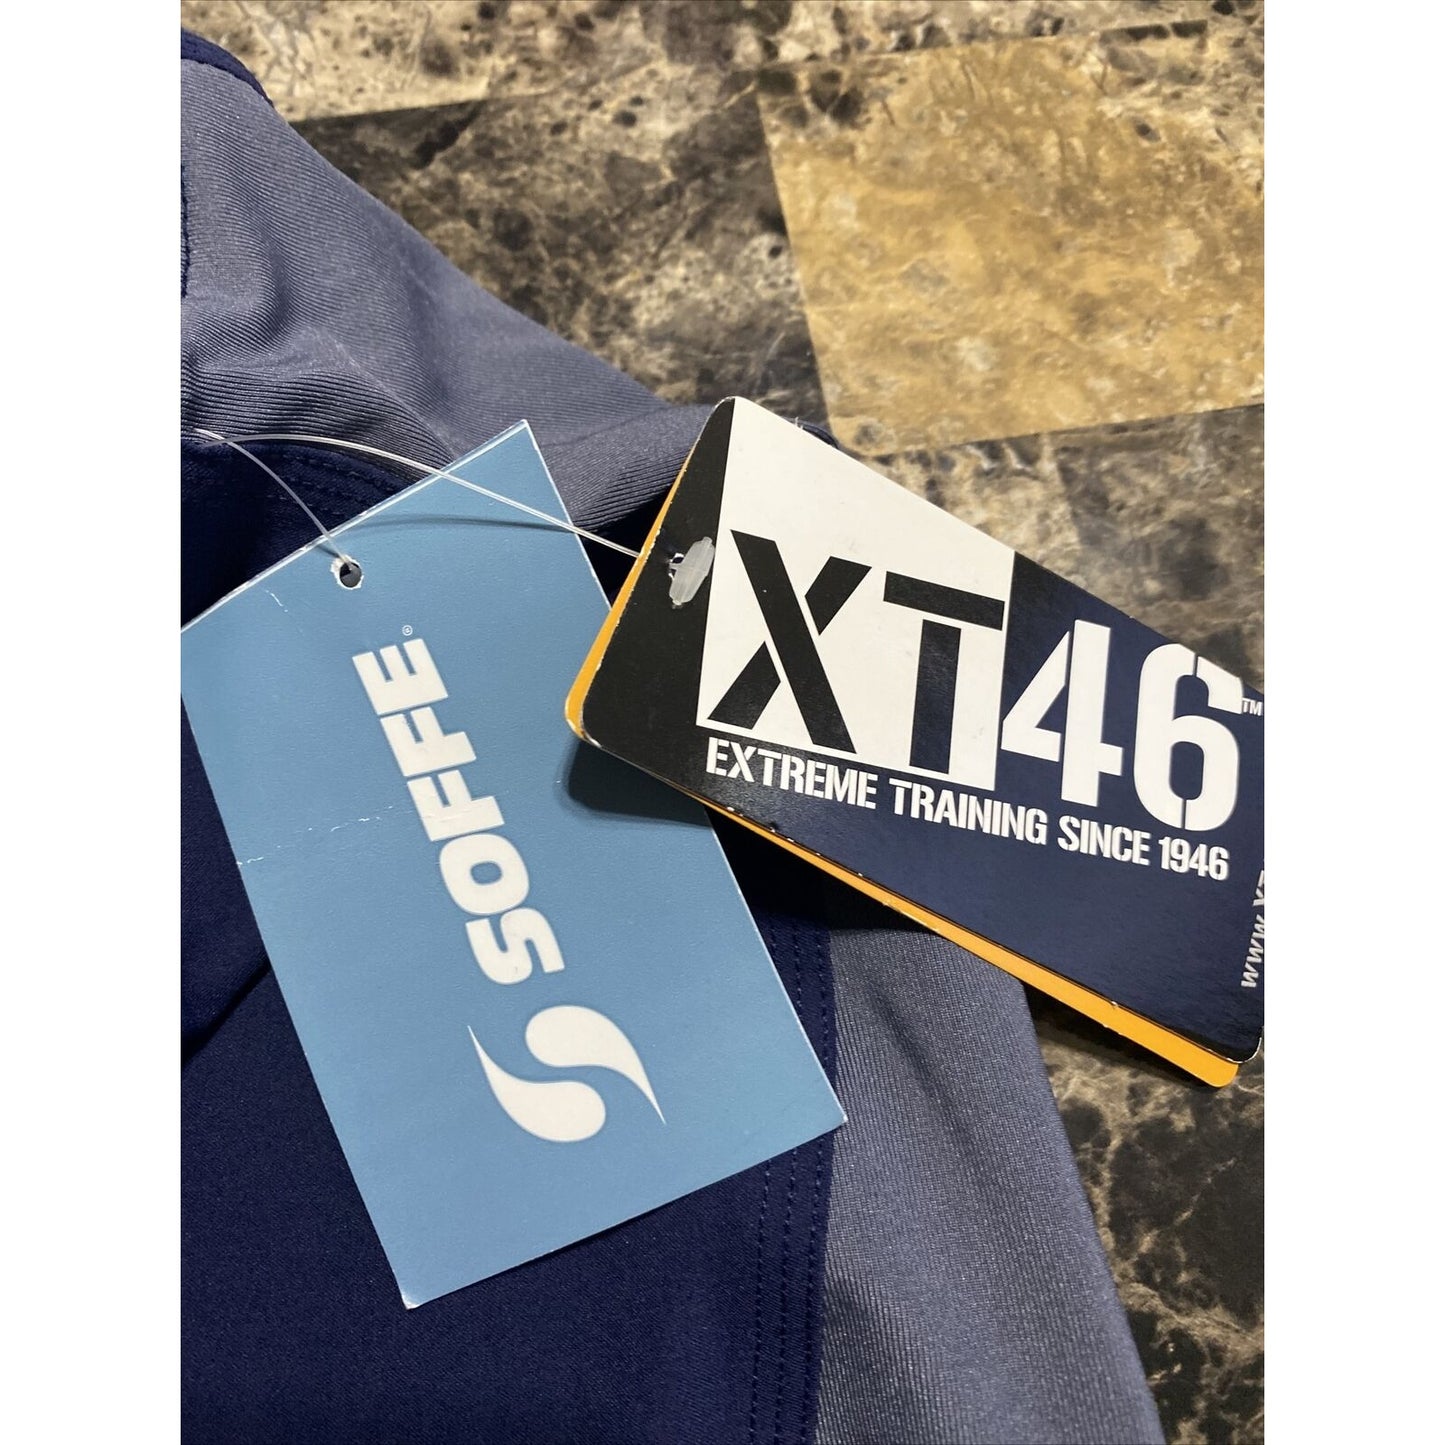 Soffe Extreme Training XT46 Men’s 36 (L) Navy Blue Gray Utility Board Shorts NWT